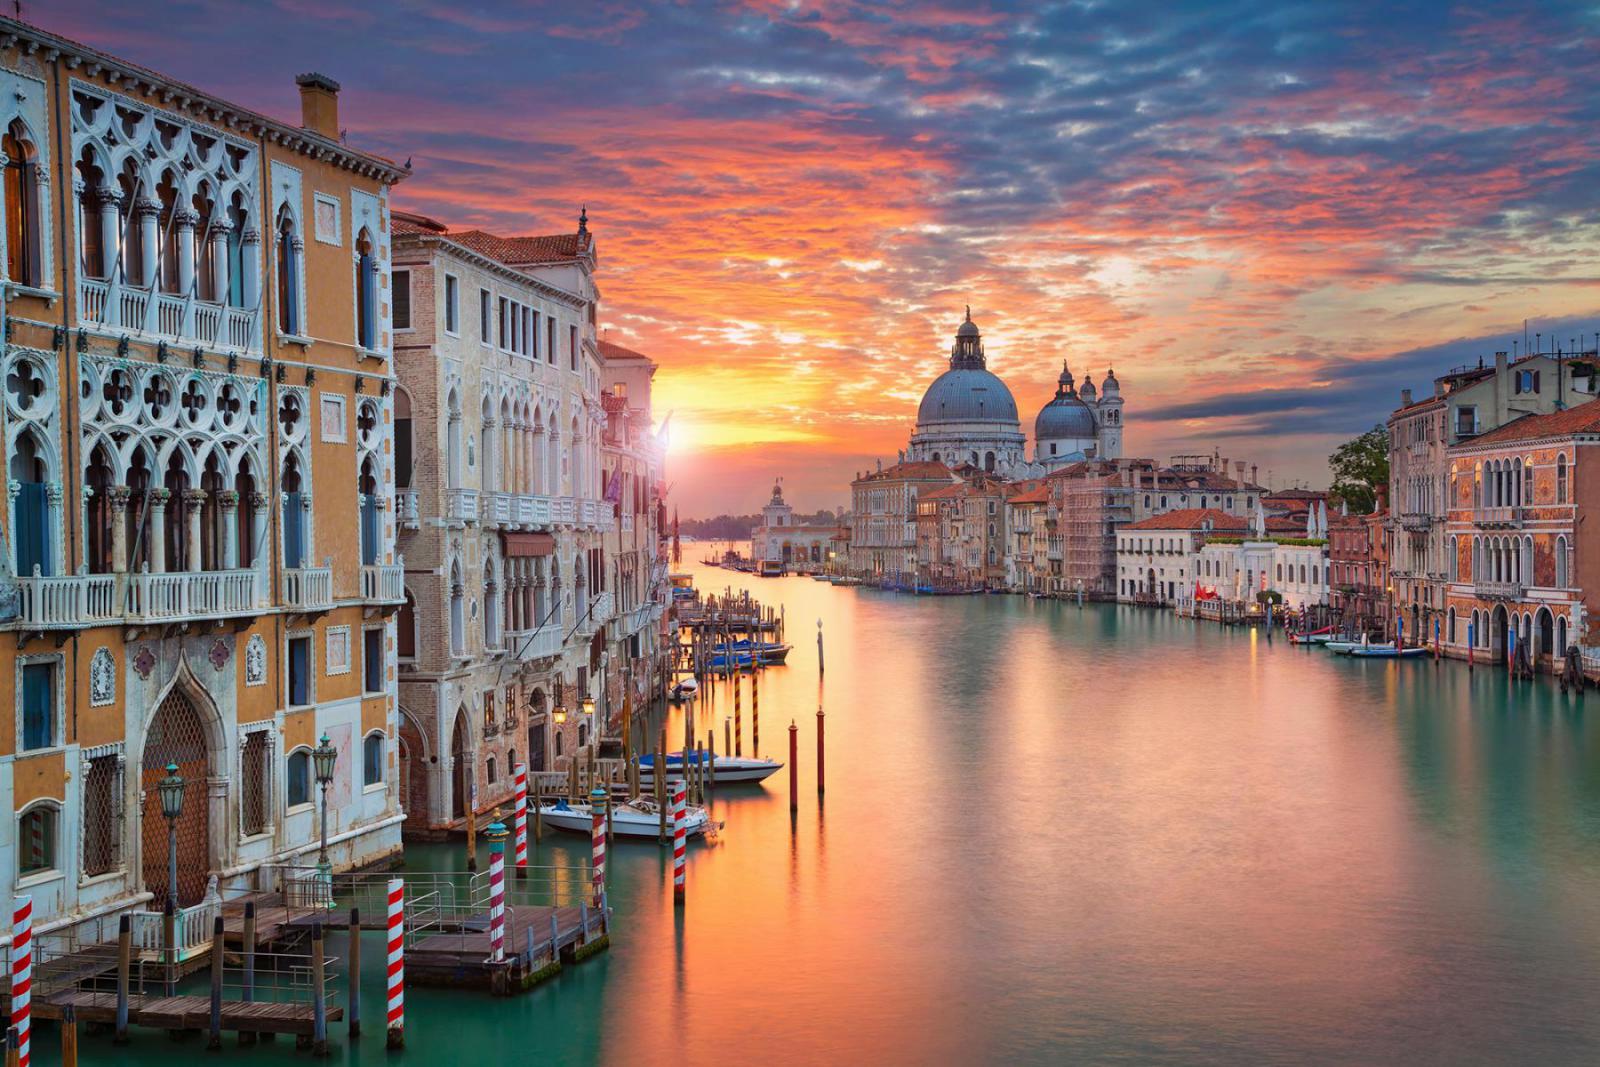 Het prachtige Canal Grande in Venetië met zonsondergang